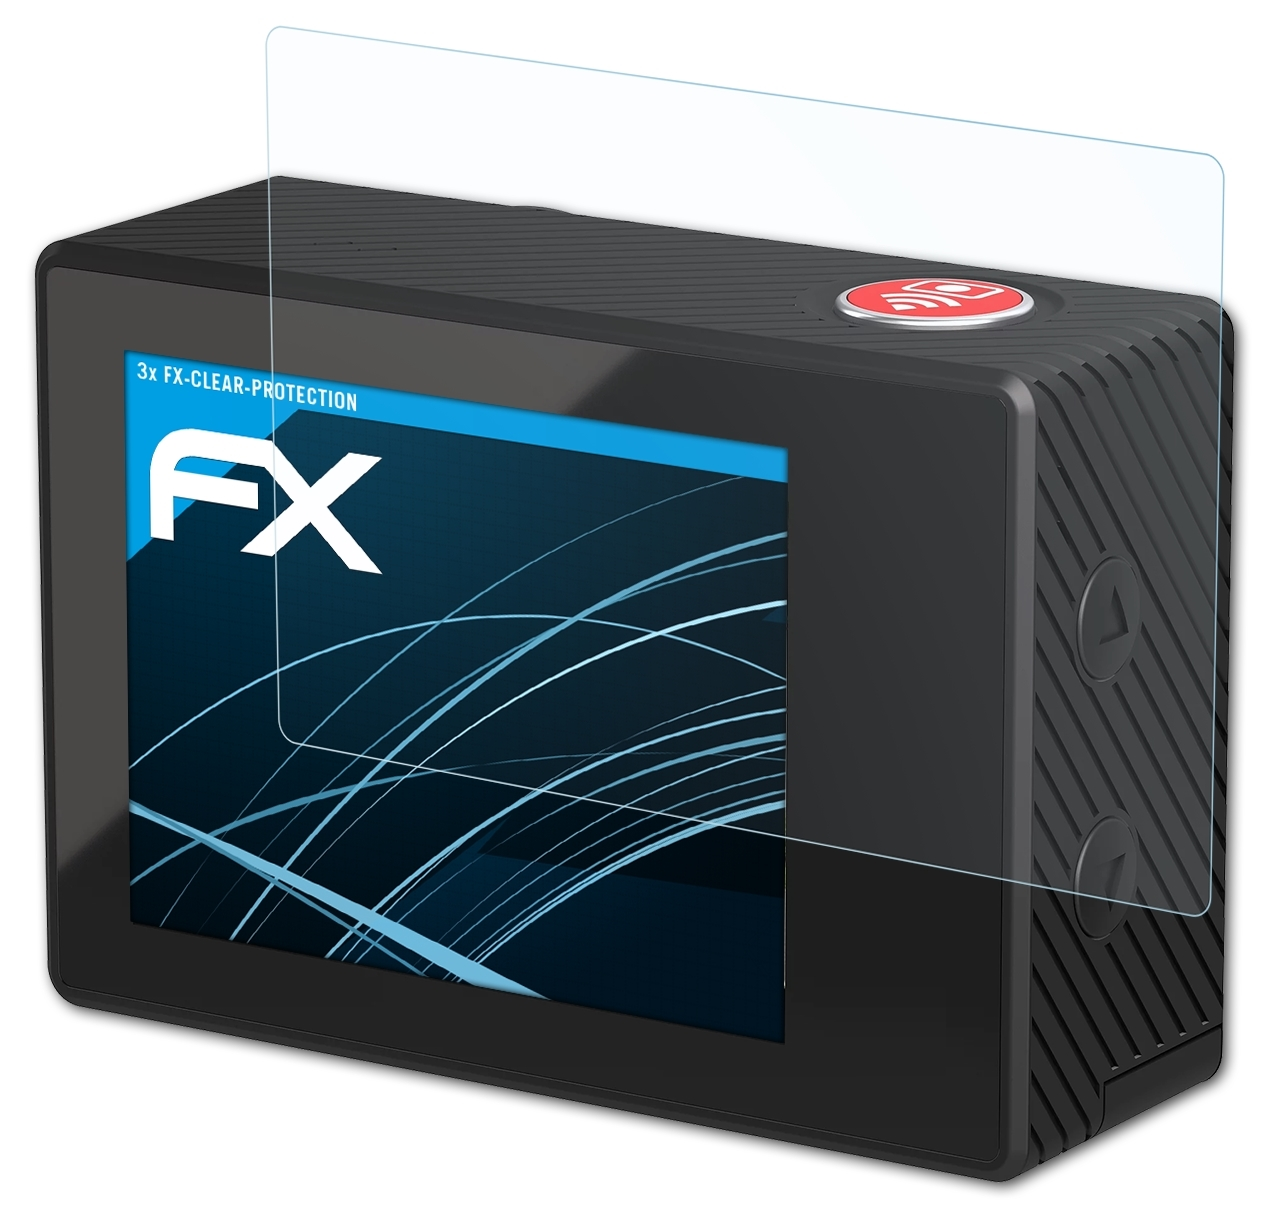 ATFOLIX 3x FX-Clear Taurus) Displayschutz(für Lamax X10